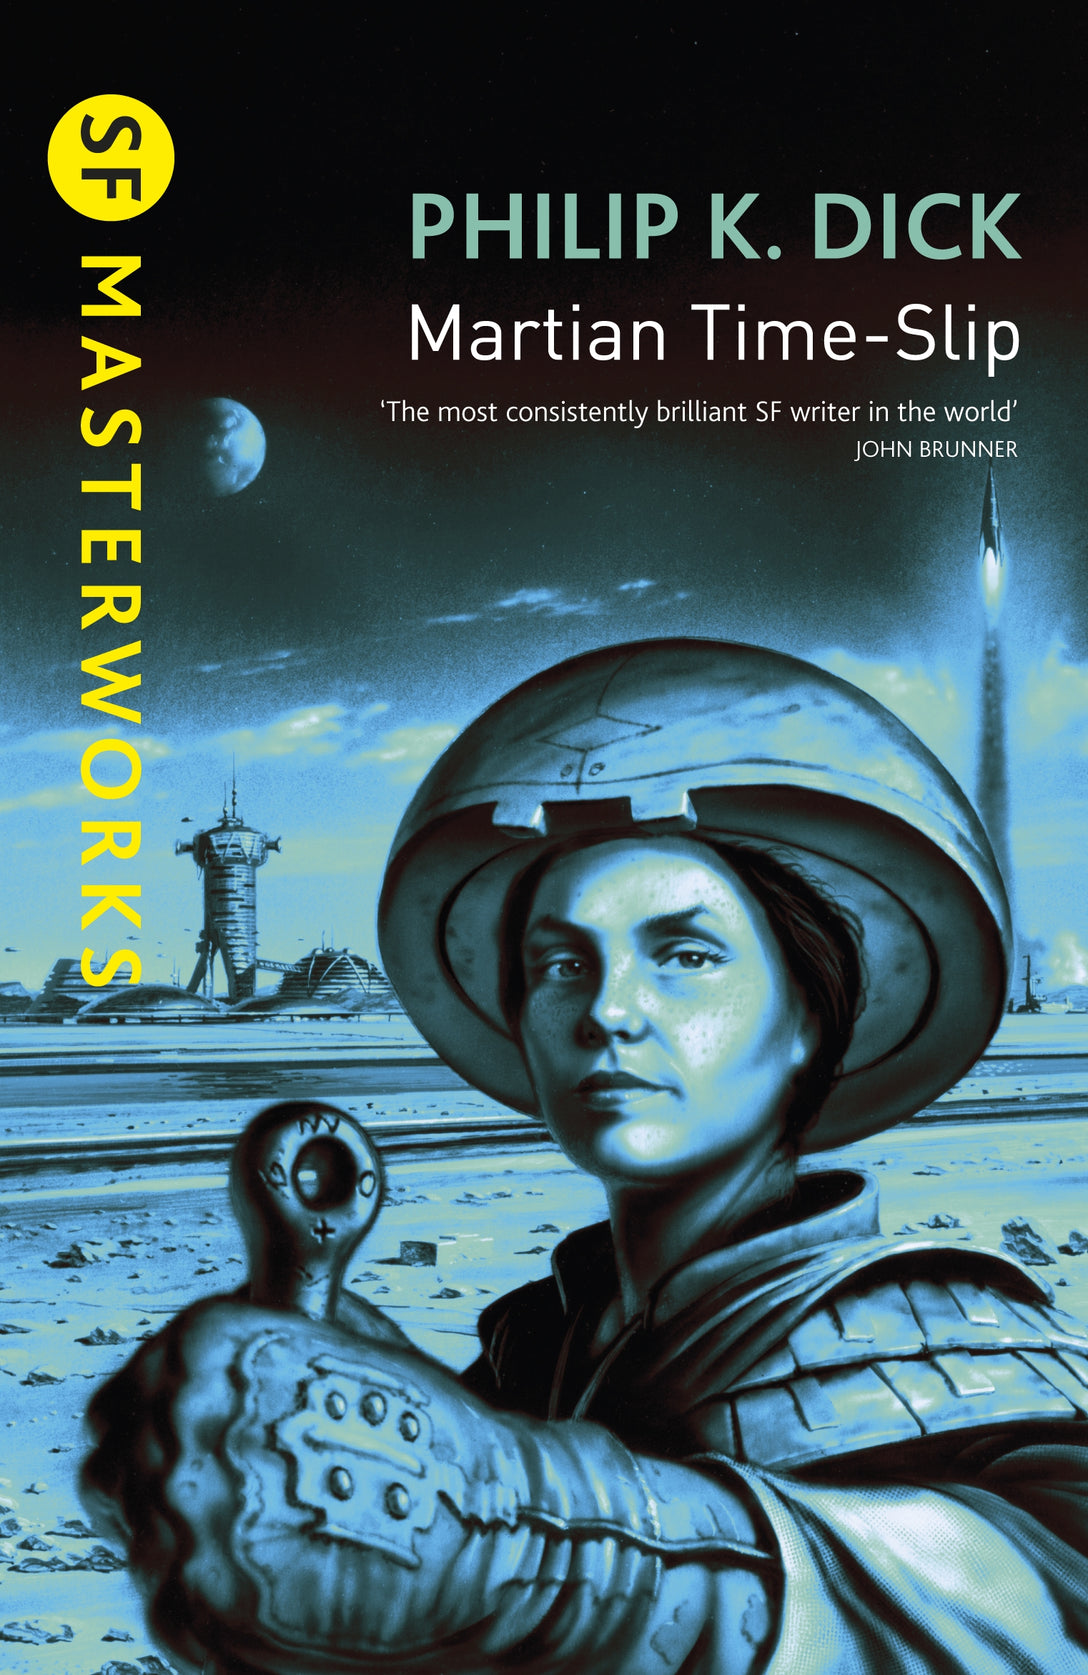 Martian Time-Slip by Philip K Dick